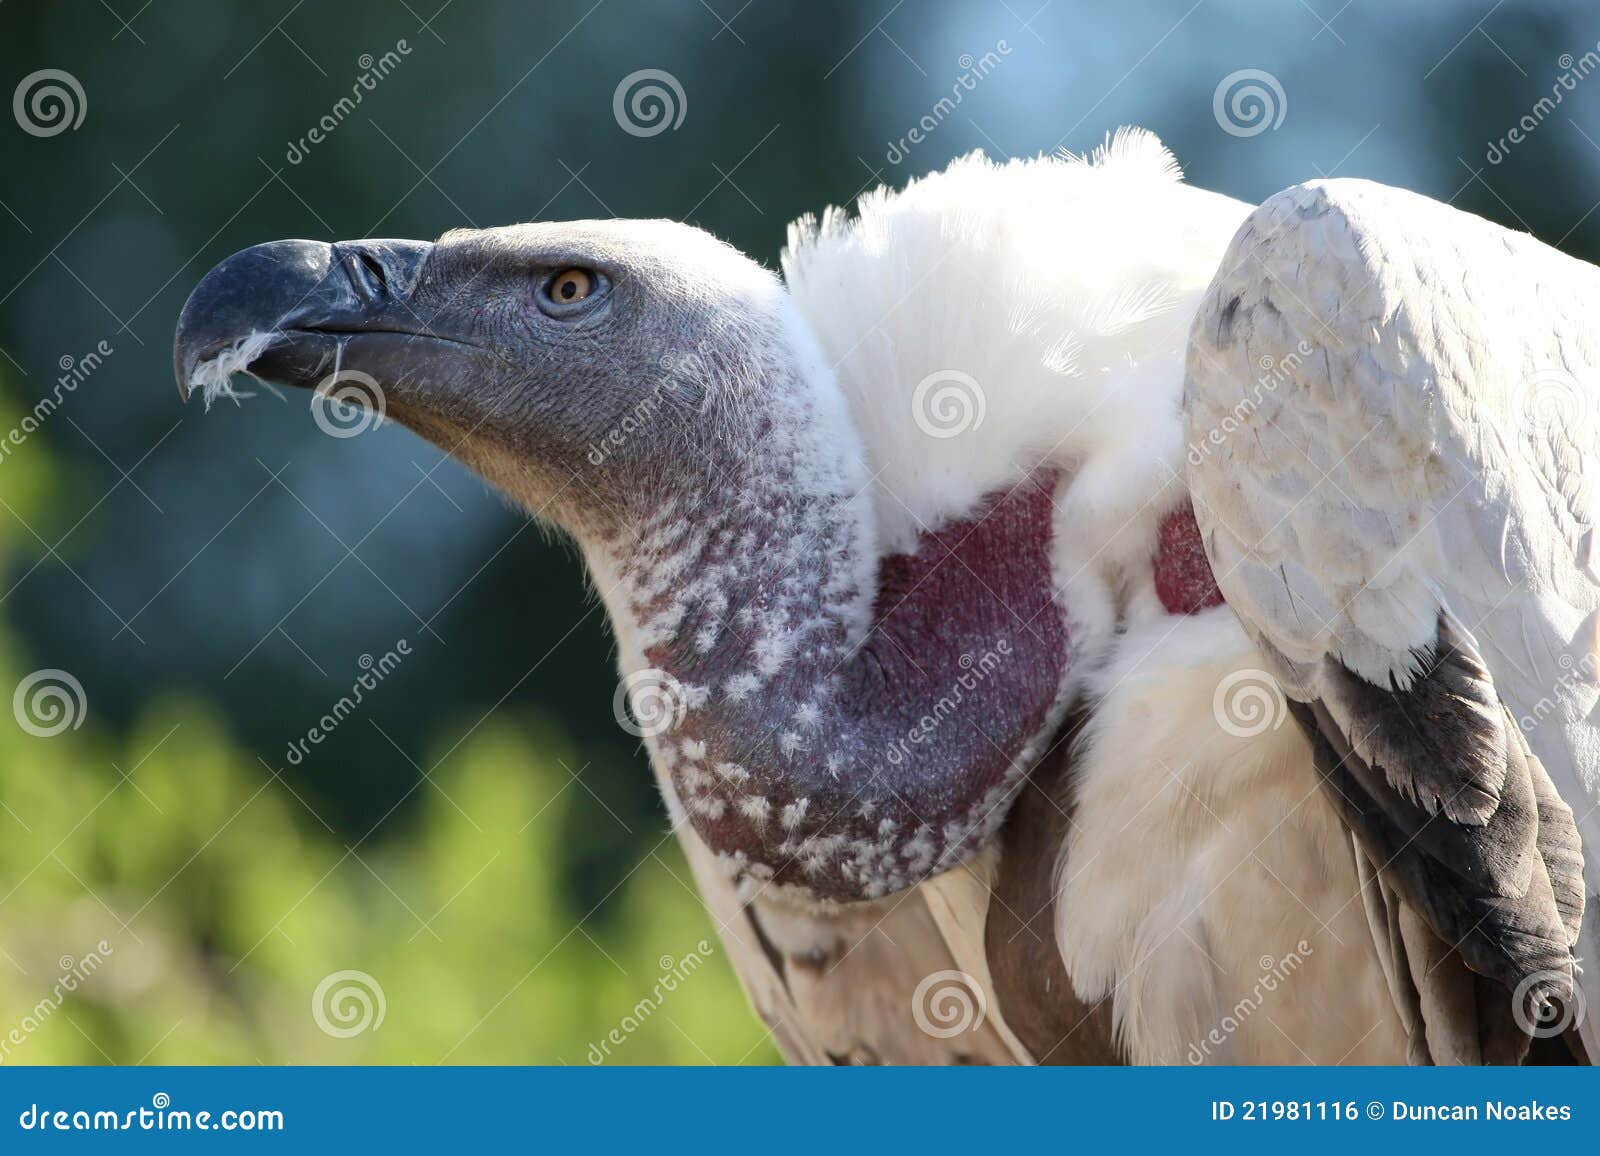 Cape Vulture Bird stock photo. Image of creature, feathers - 21981116